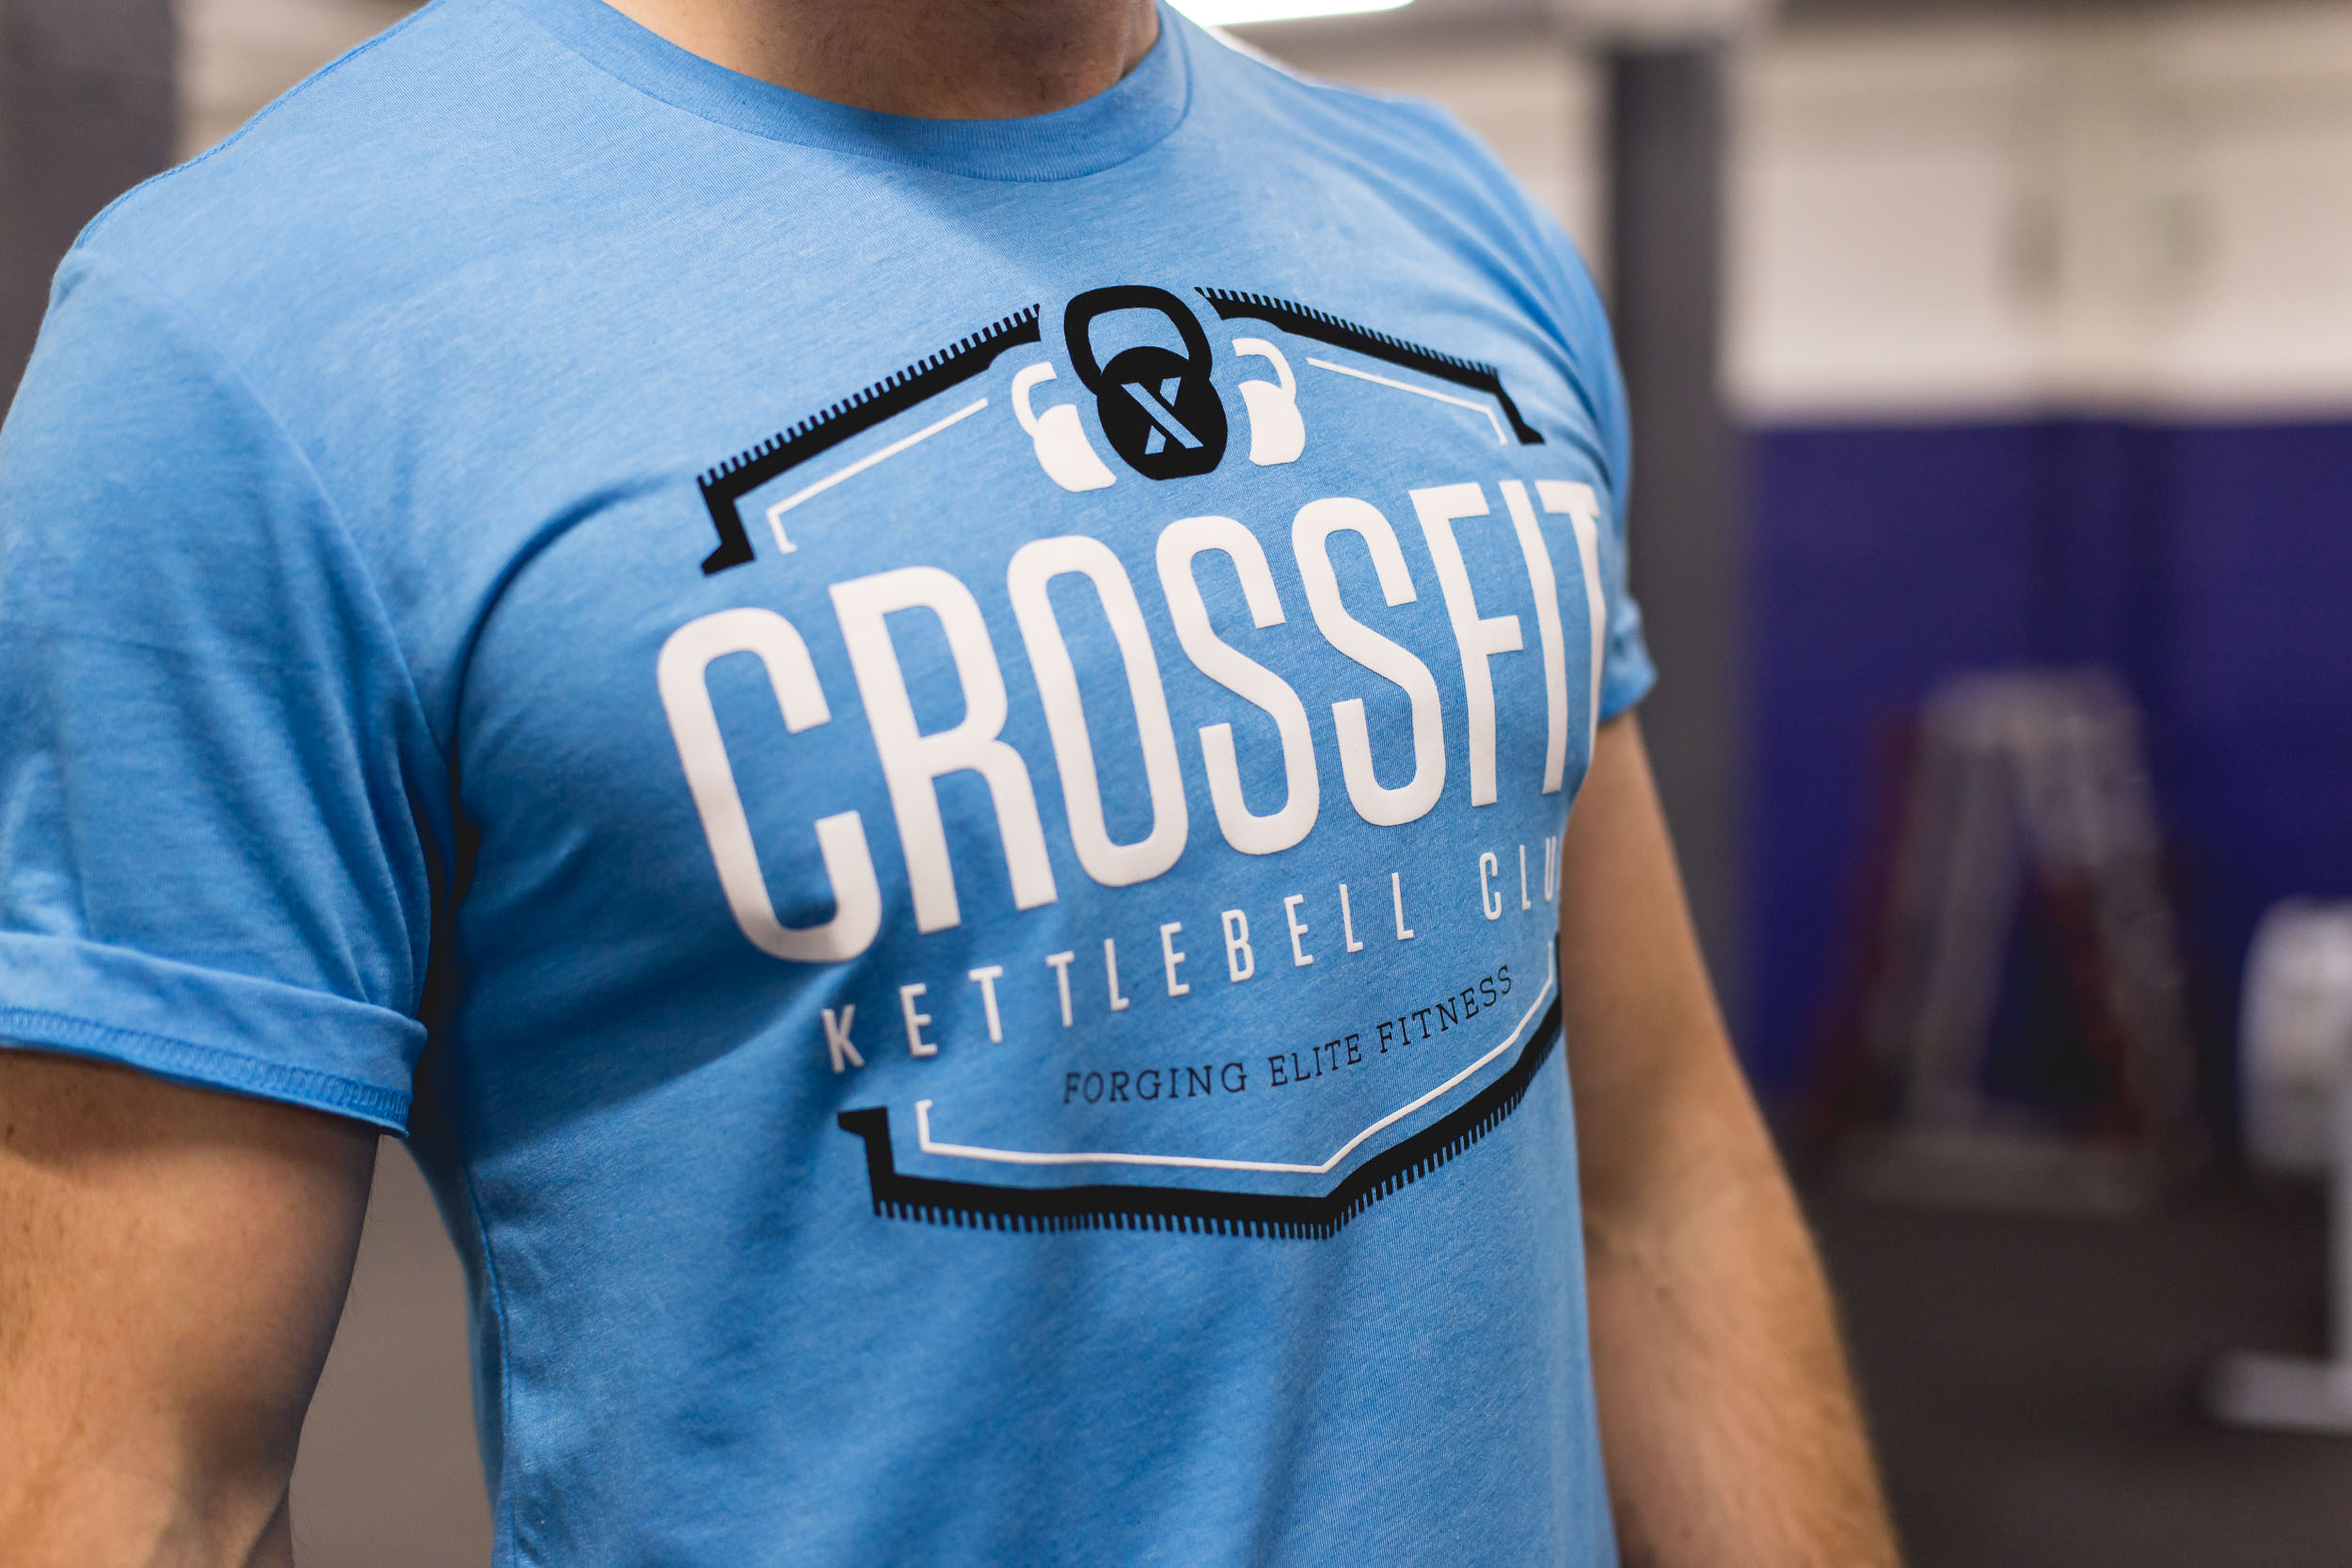 Crossfit UK printed clothing t-shirts-9178.jpg